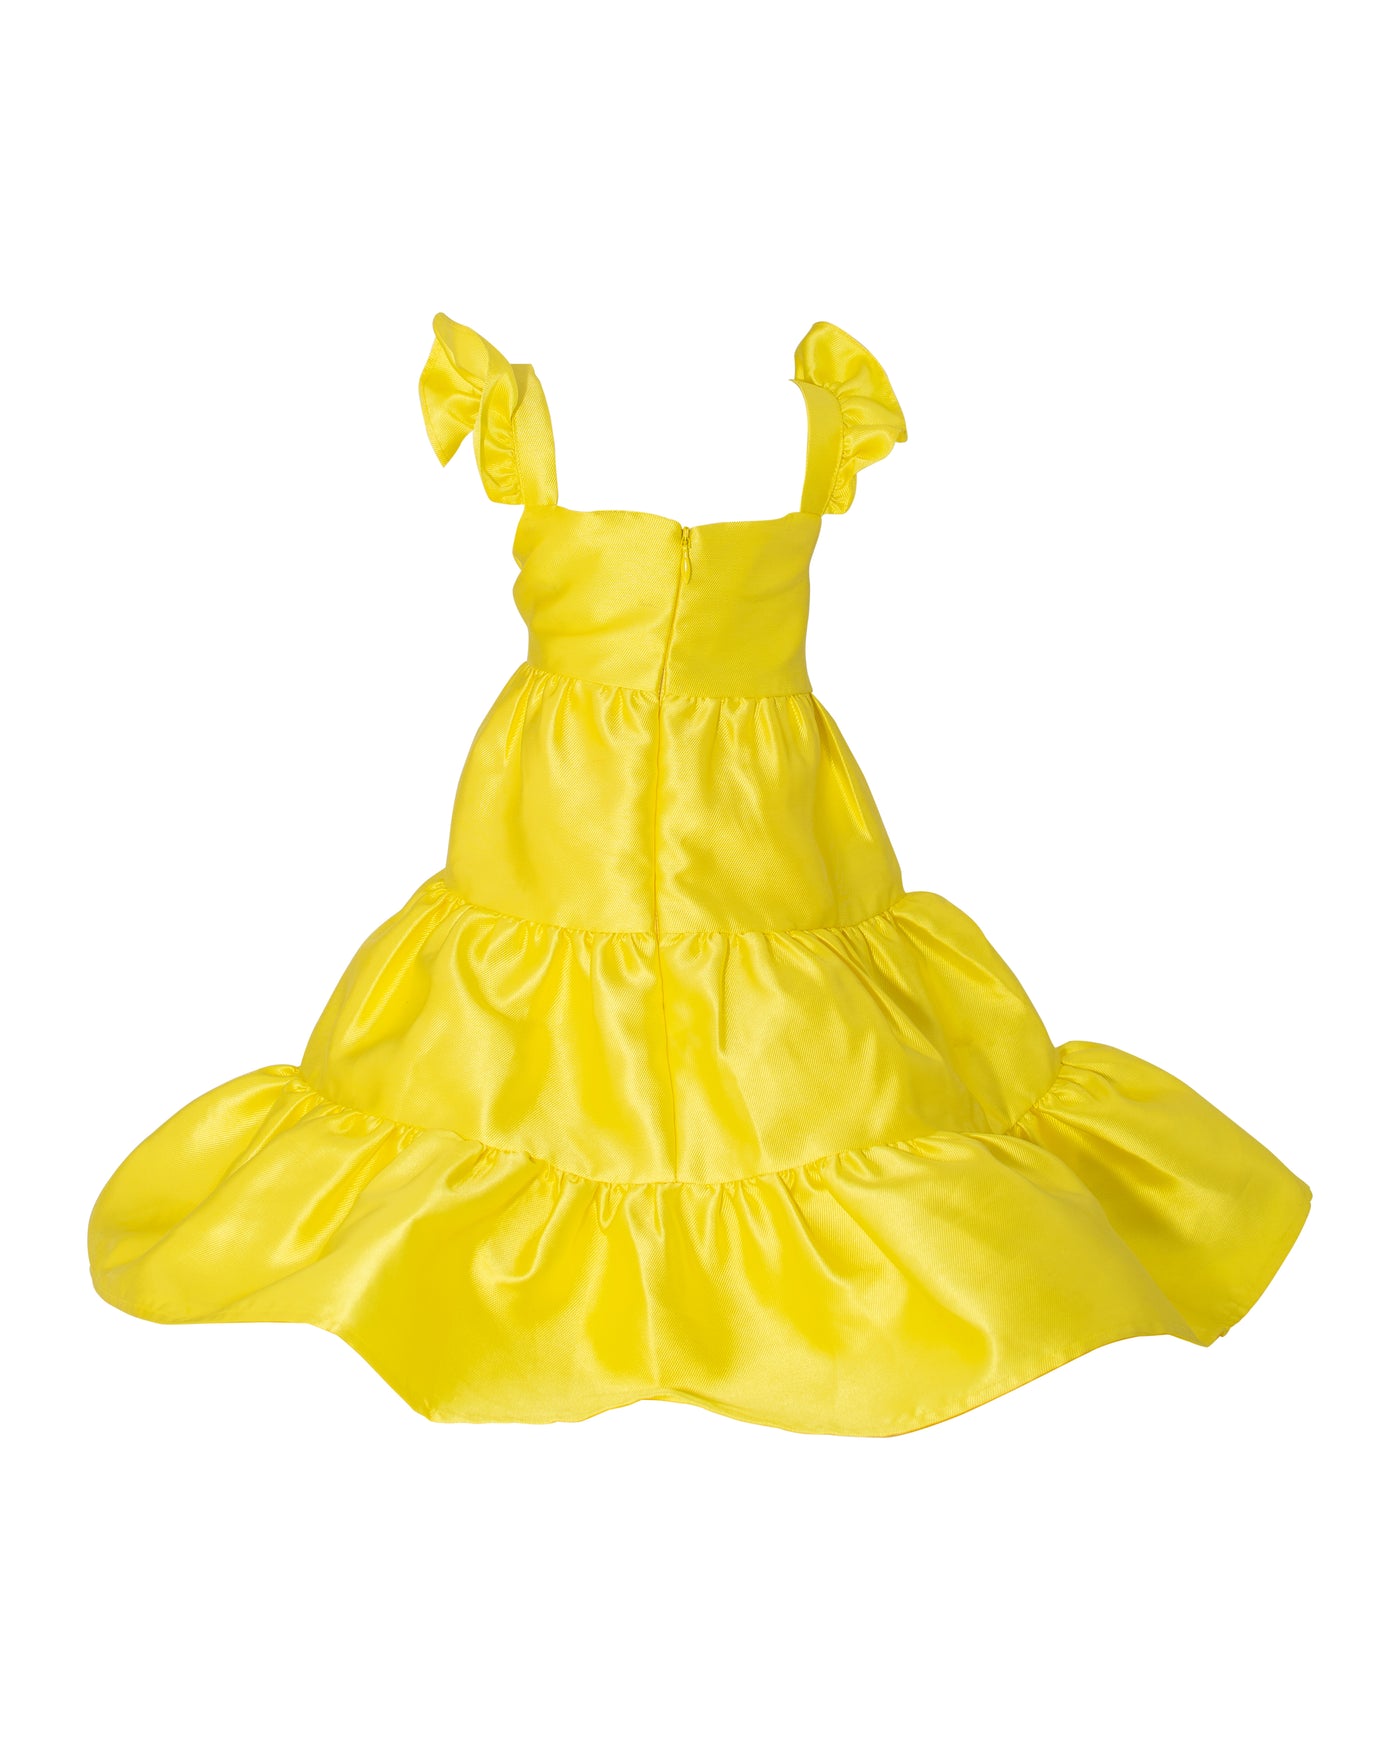 A Ray of Sunshine Mini - Dress